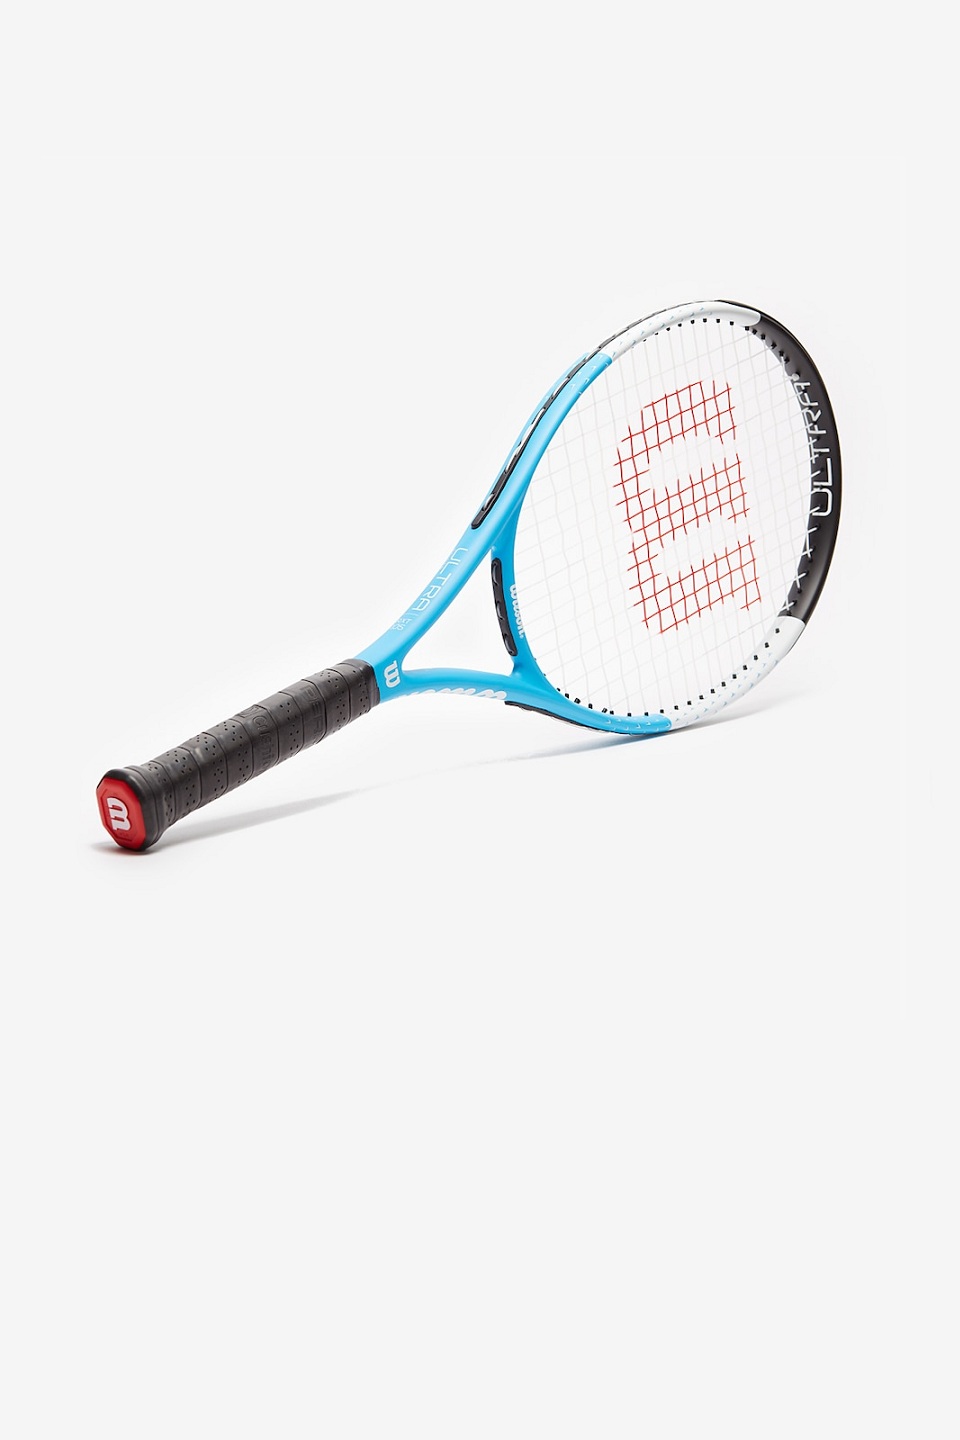  - Wilson Ultra Power RXT 105 Tenis Raketi